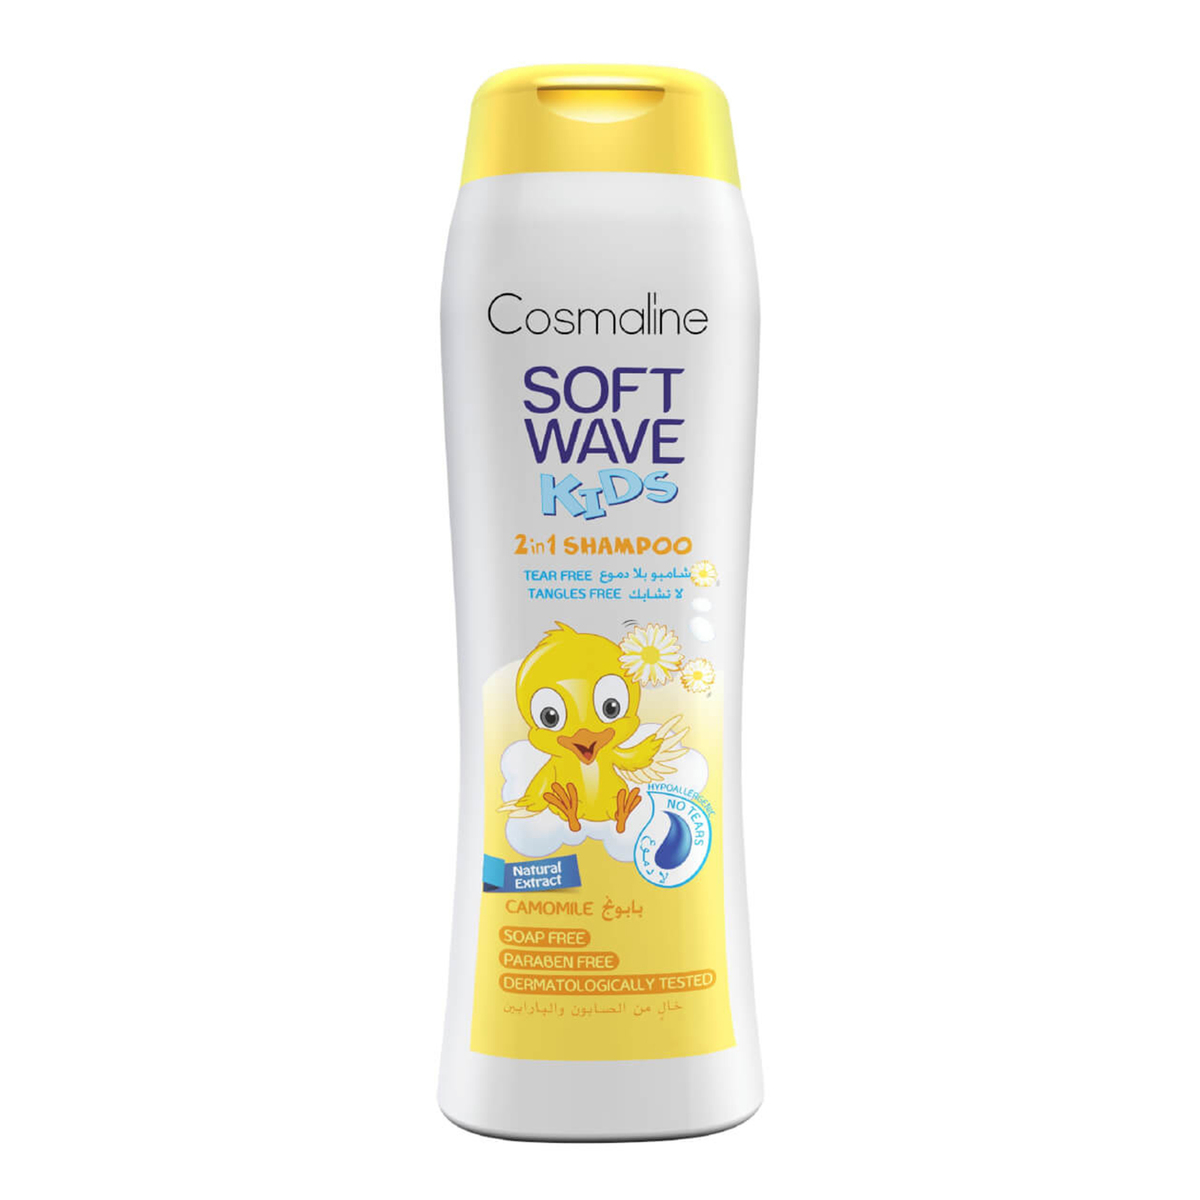 Cosmaline Soft Wave Camomile 2in1 Kids Shampoo Tear Free 400ml